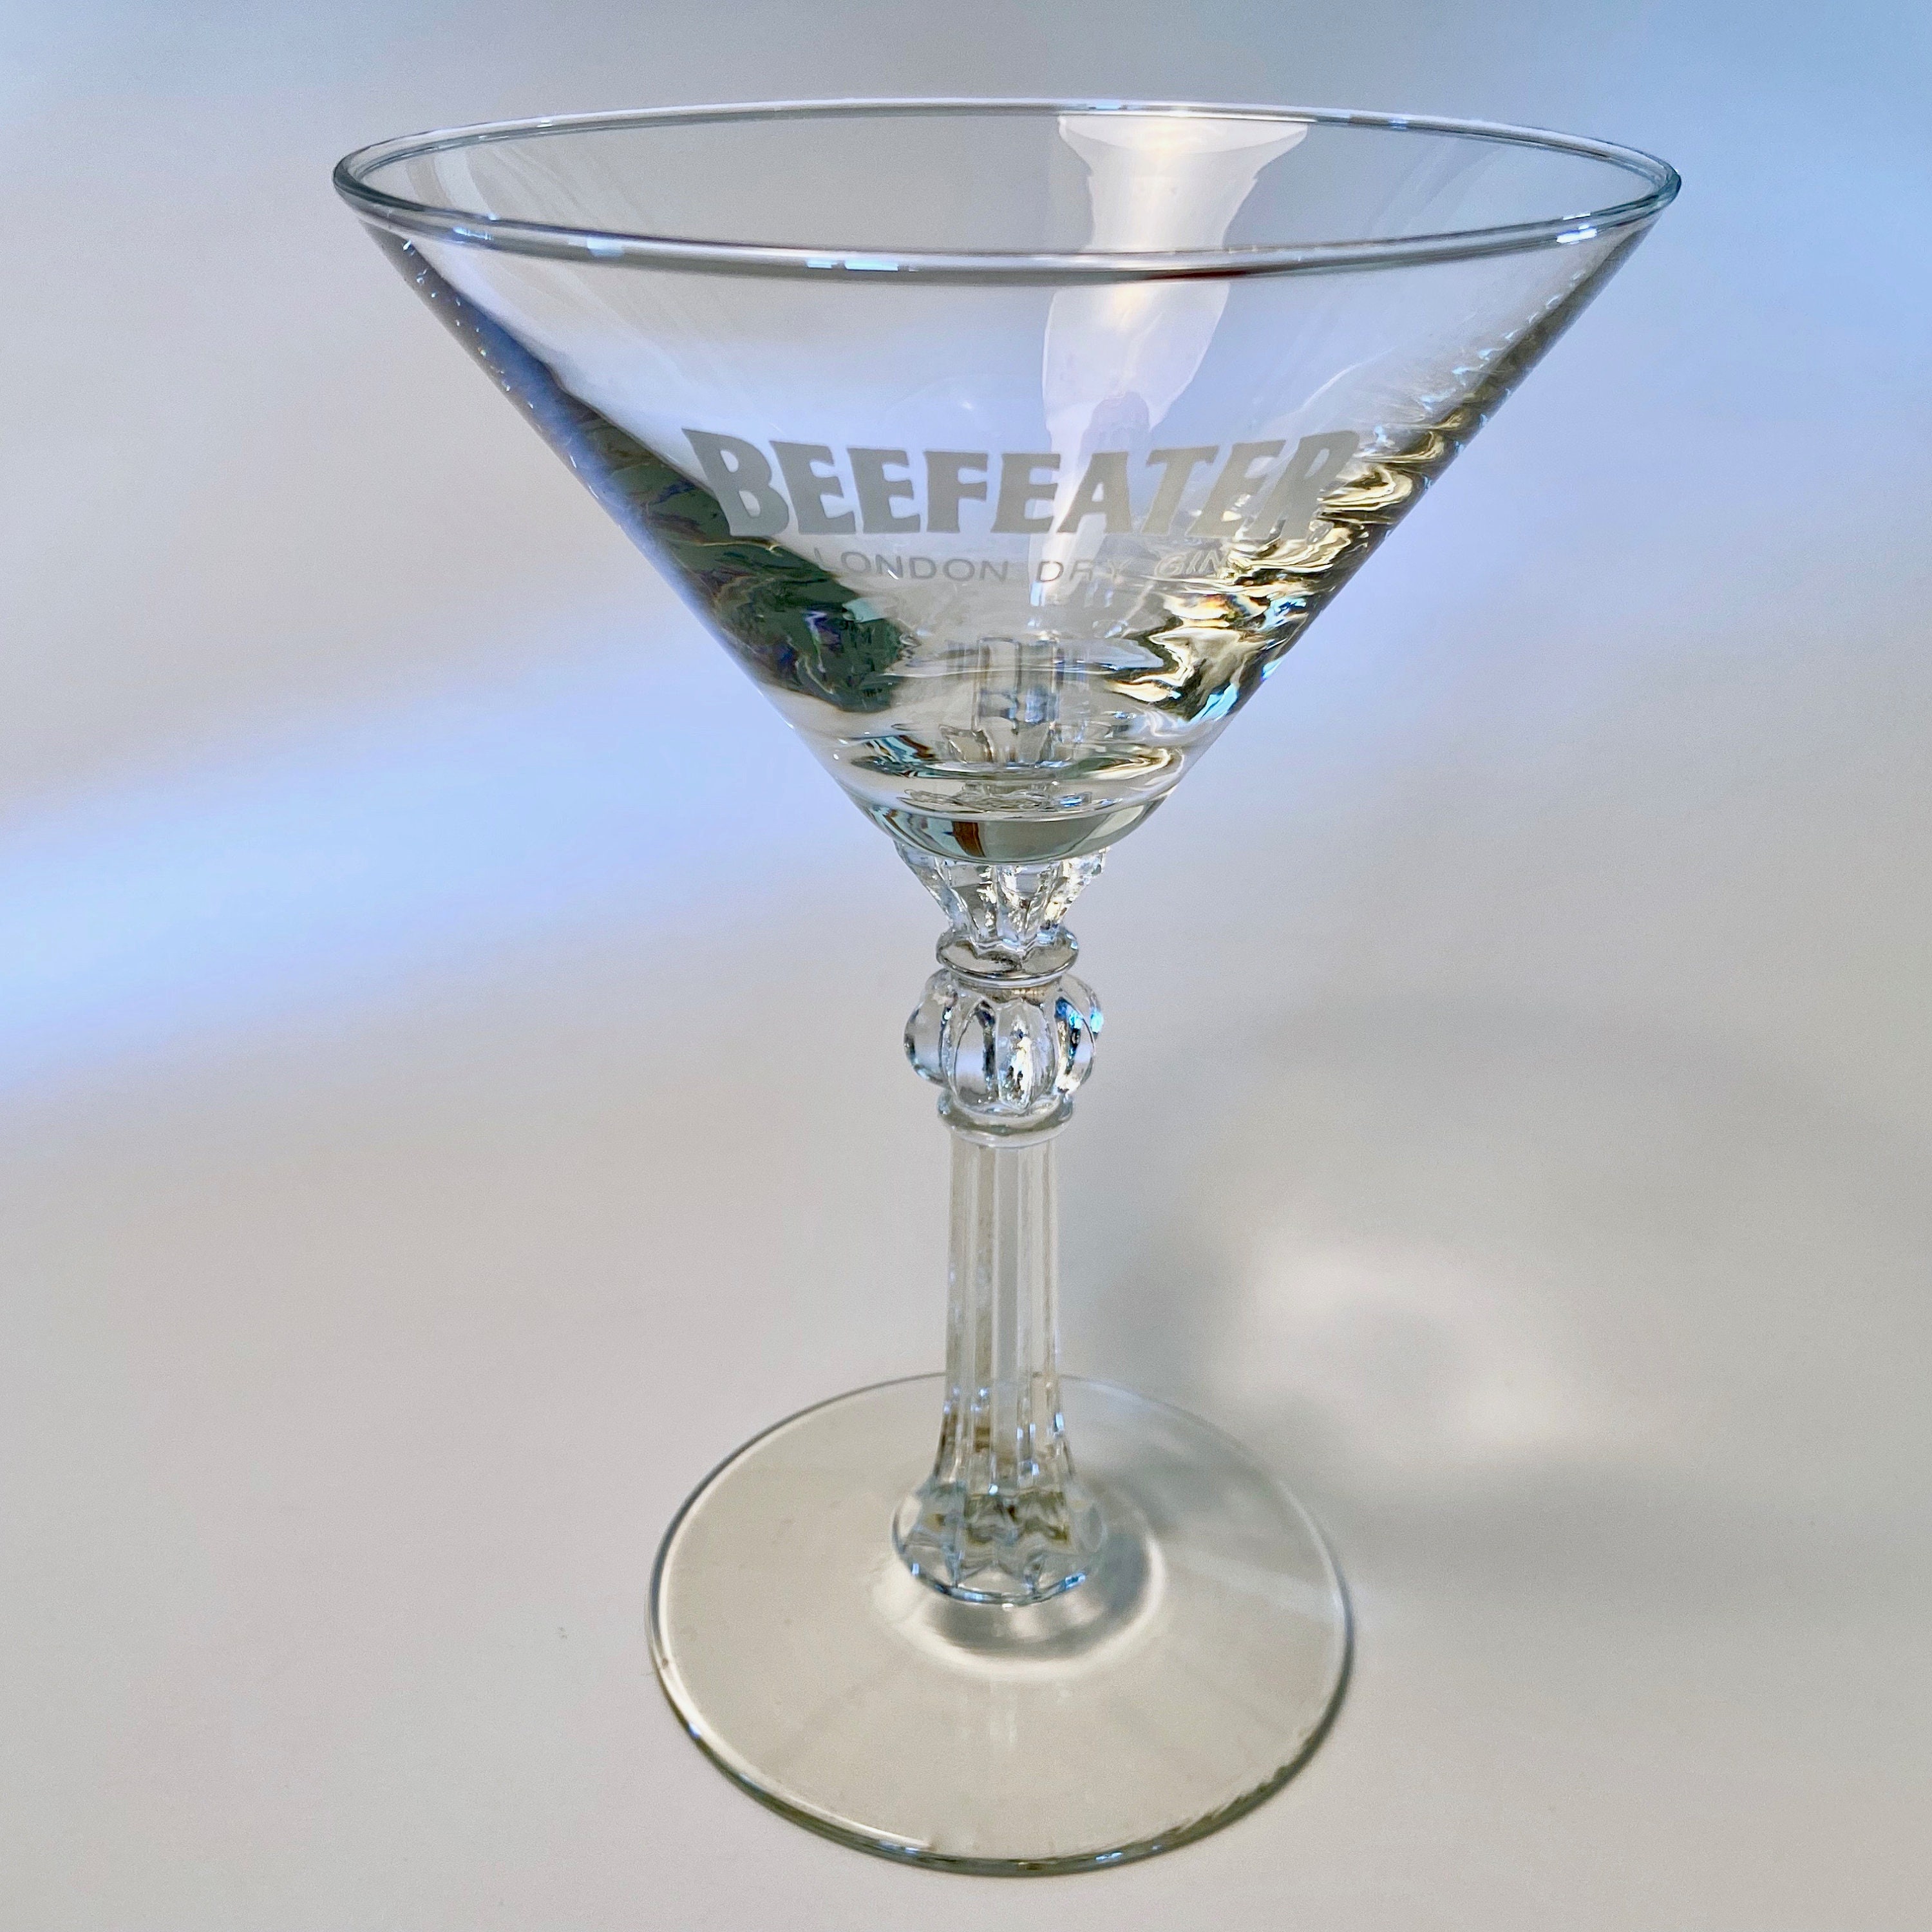 Beefeater Glas Gläser Made in London Longdrink Cocktail Gastro Bar Deko NEU 